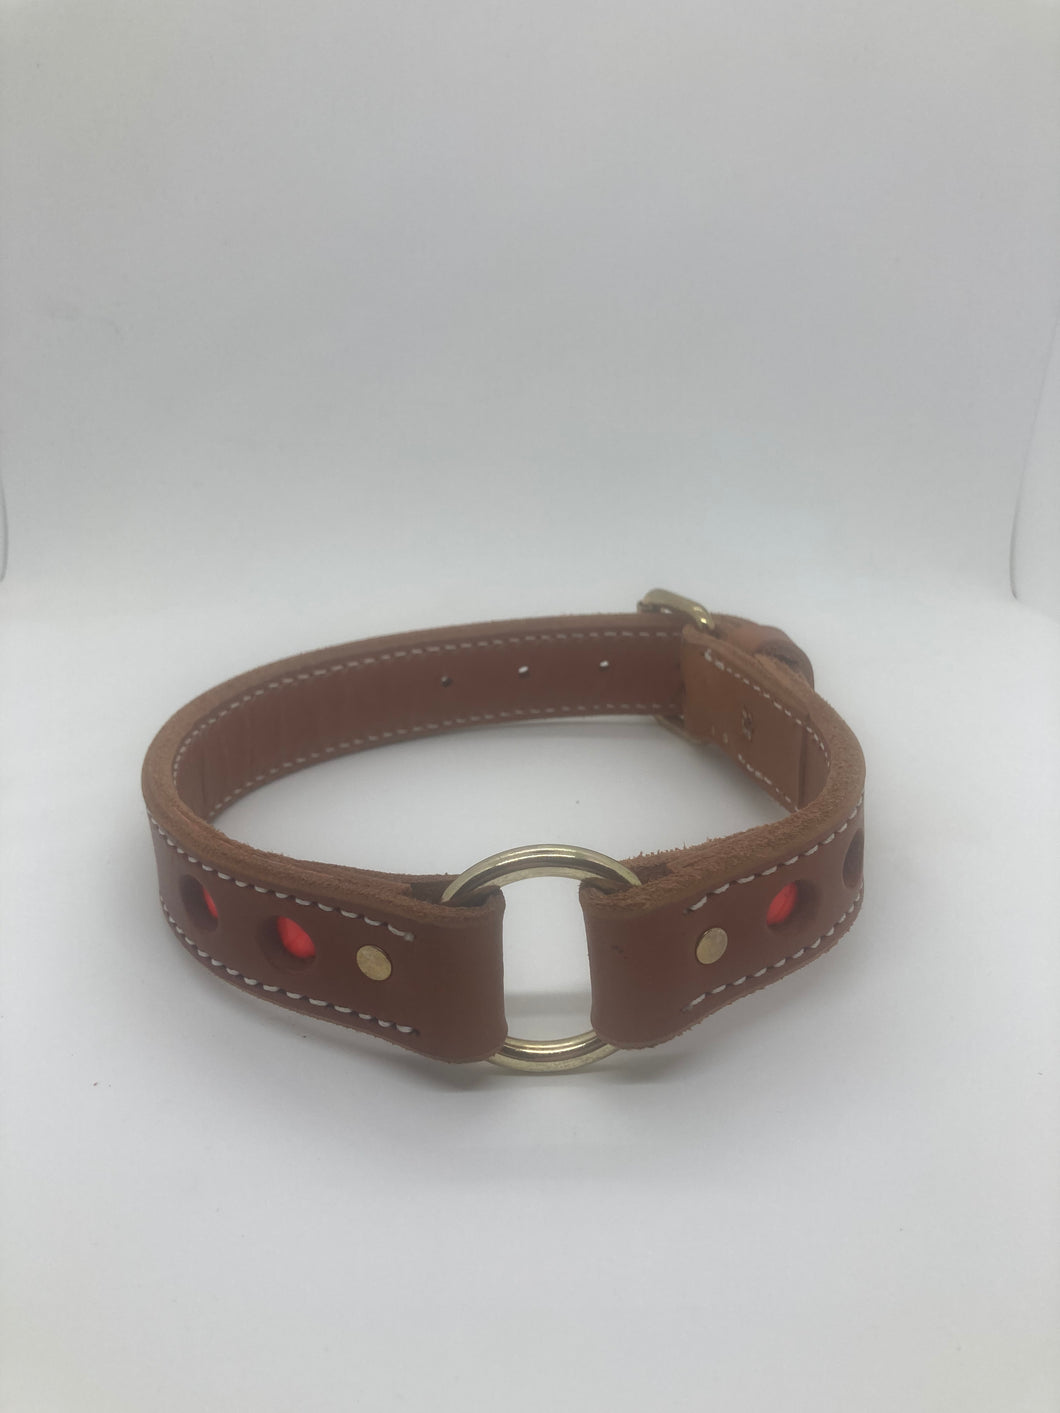 18” leather collar w/ reflective circle